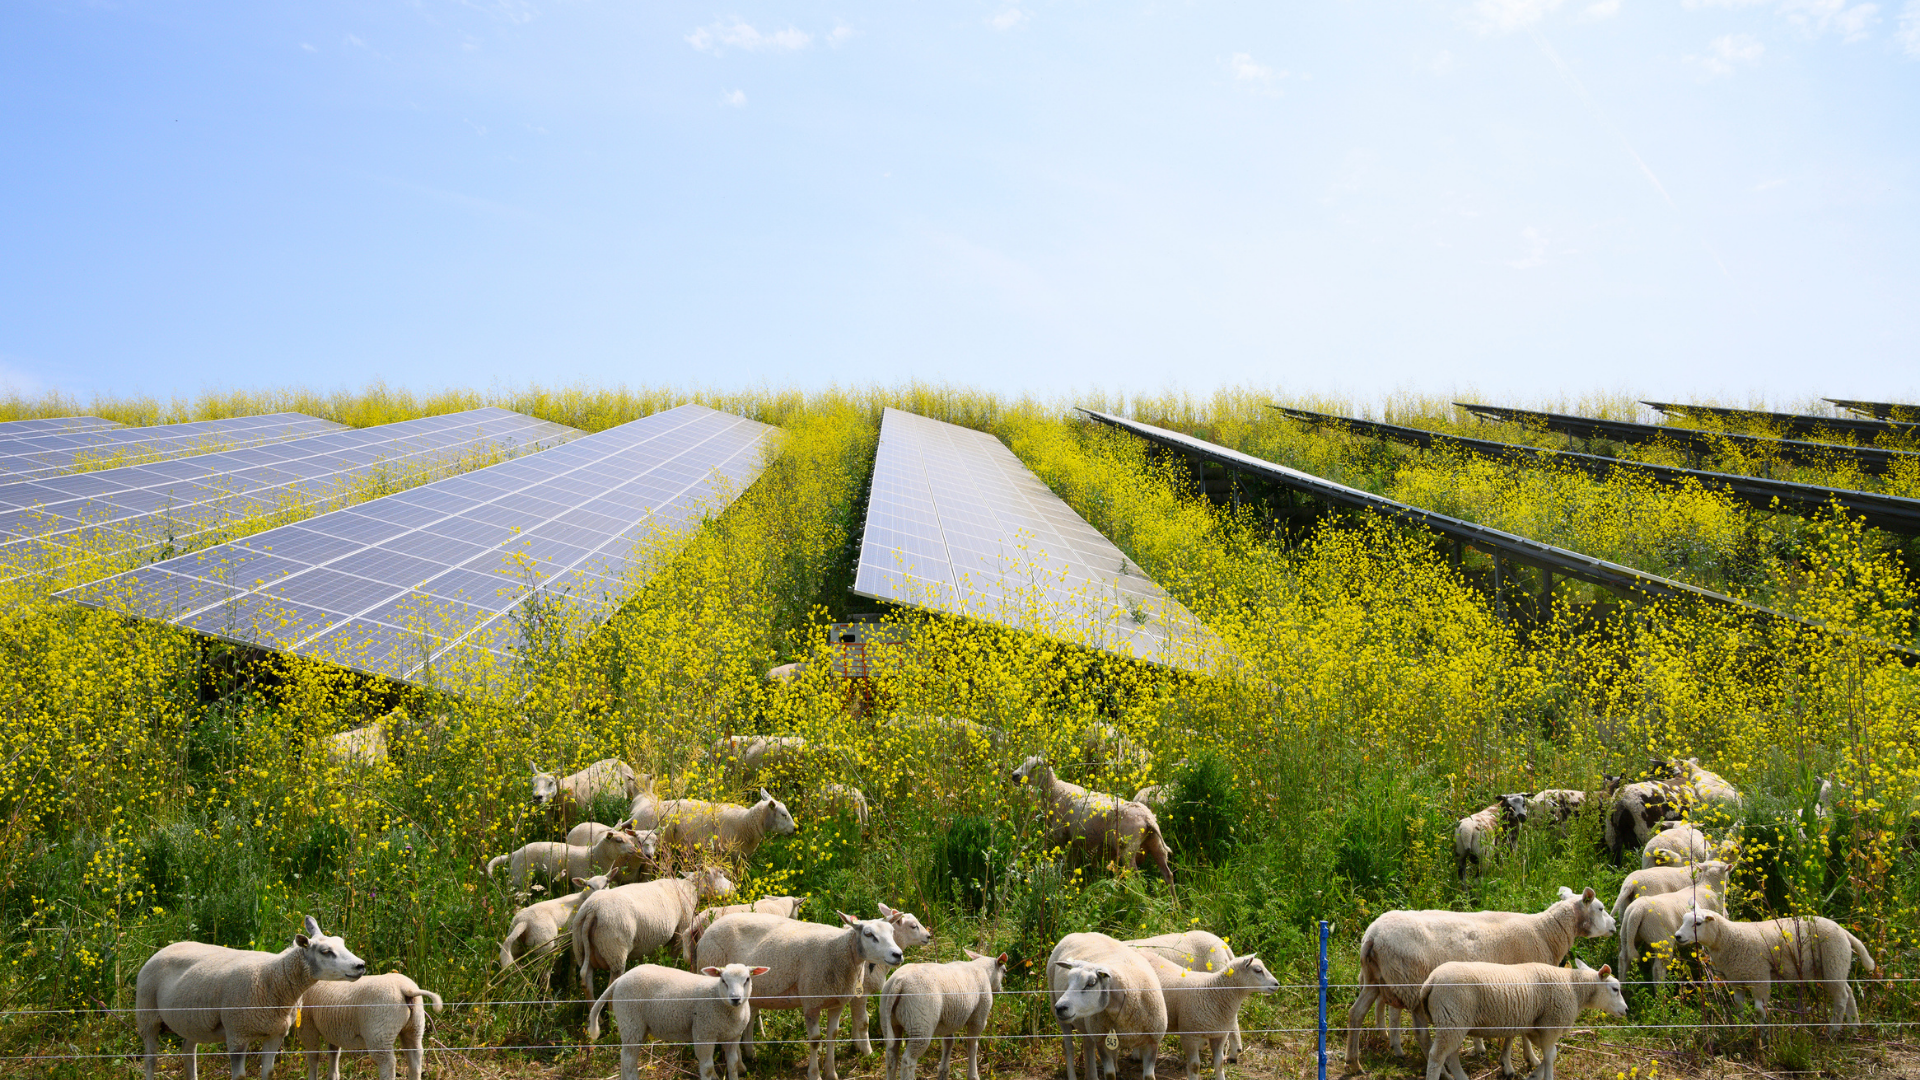 Sheep grazing mustard plants at solar farm. card